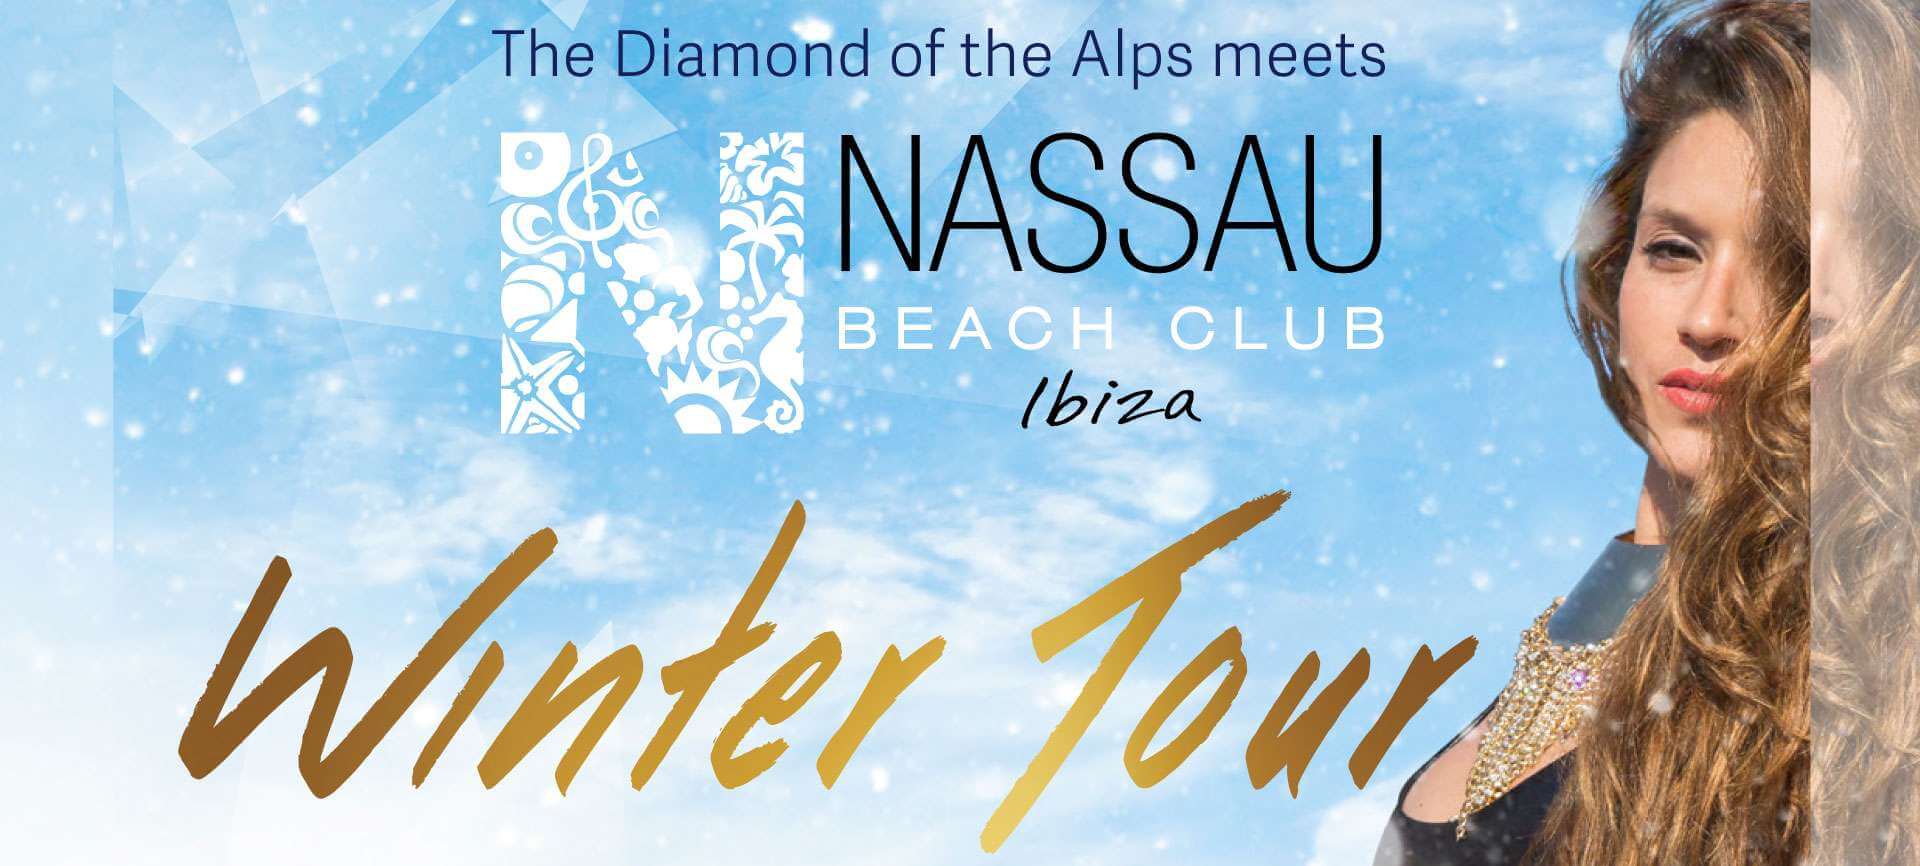 Nassau Beach Club; Hochgurgl; Ibiza